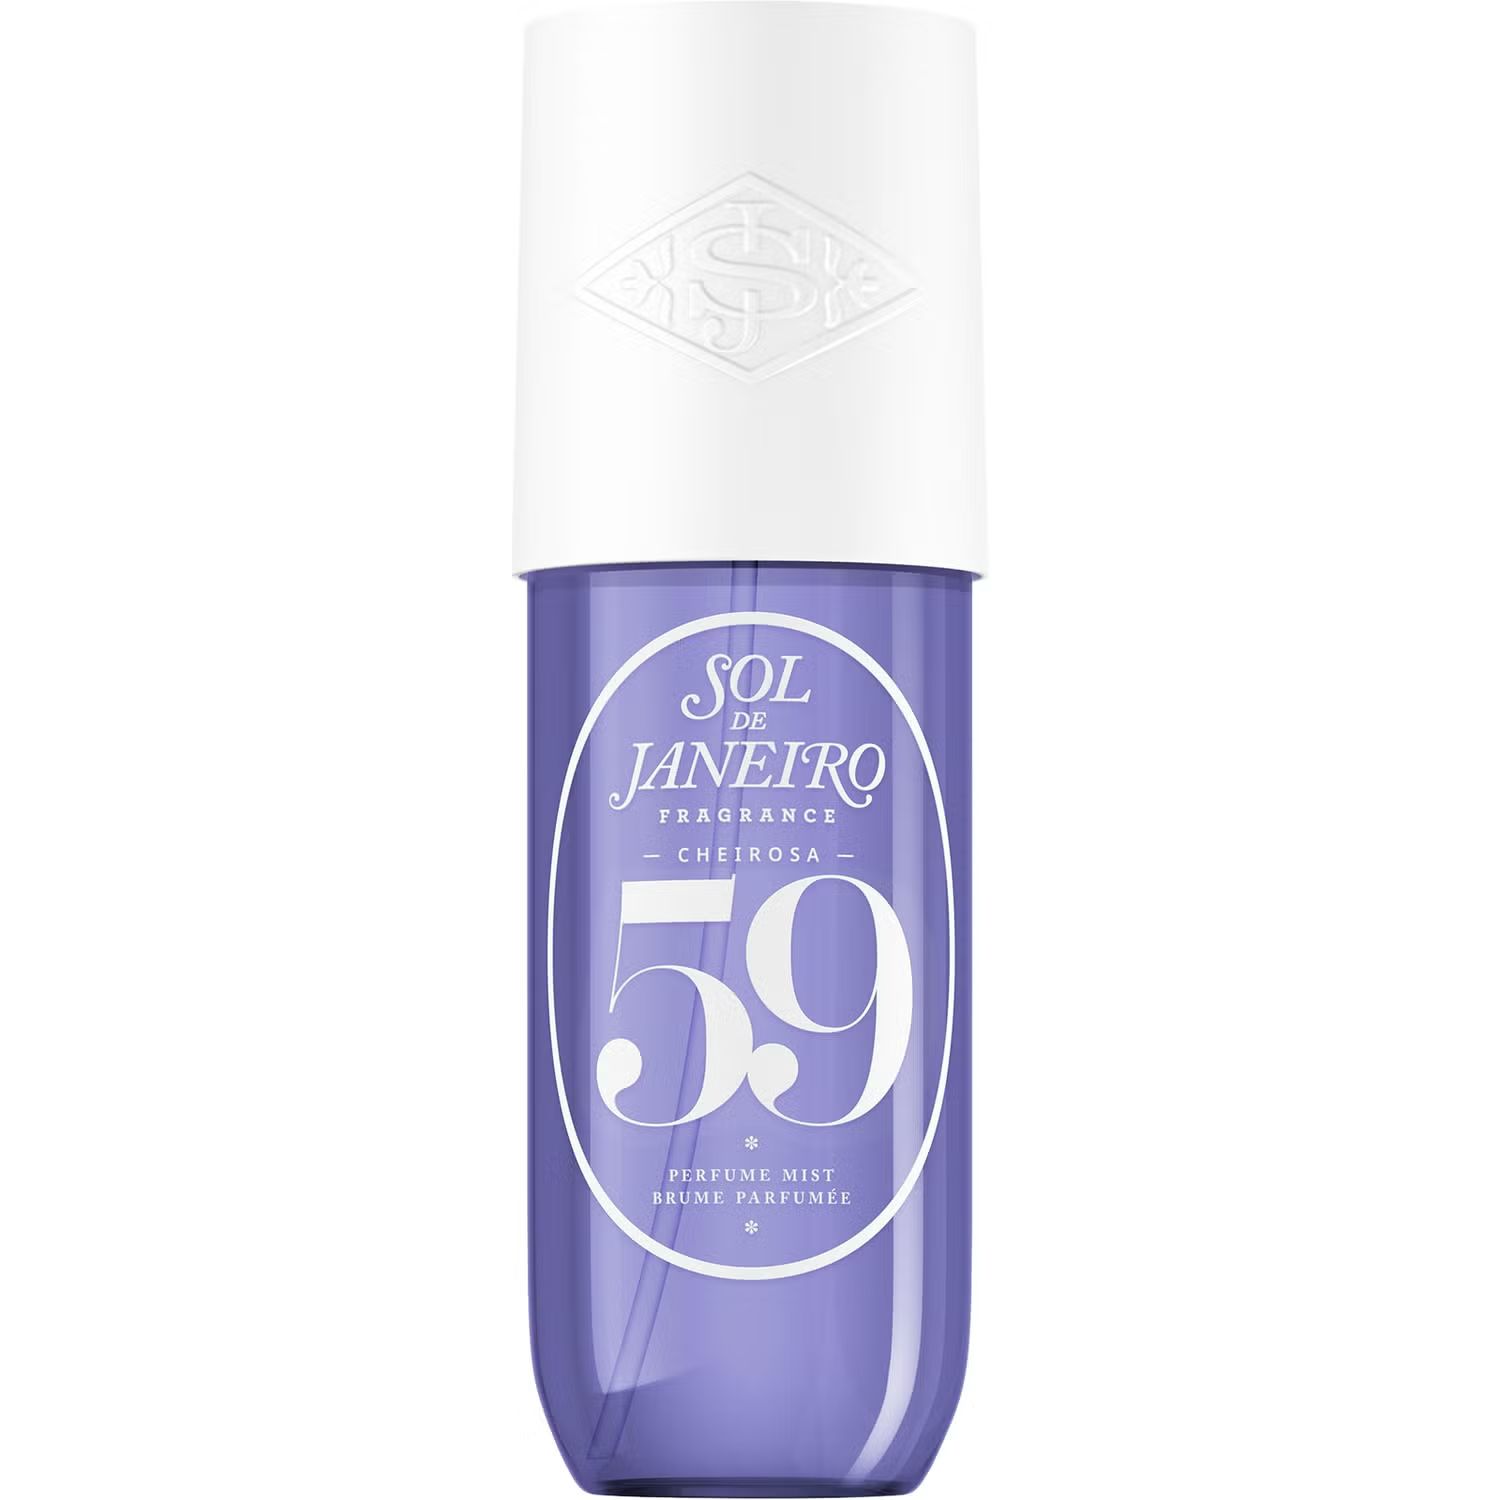 Sol de Janeiro Cheirosa 59 Perfume Mist 240ml | Look Fantastic (UK)